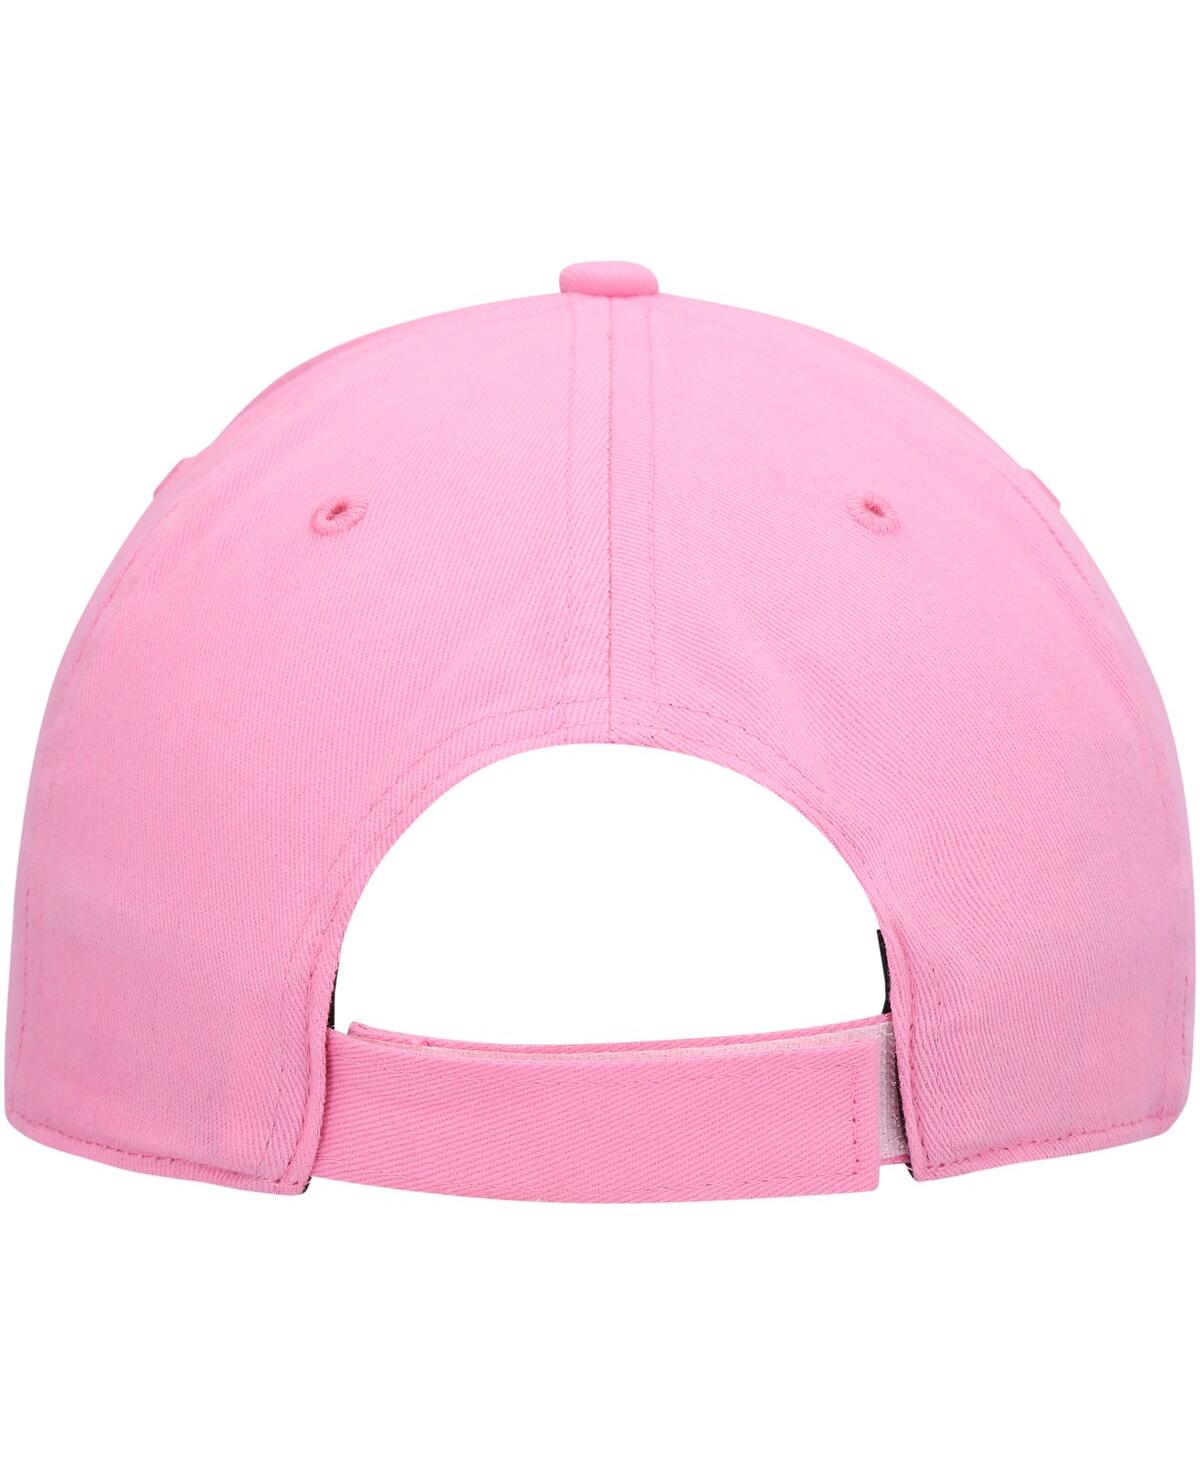 Shop 47 Brand Girls Youth ' Pink Arizona Cardinals Rose Mvp Adjustable Hat